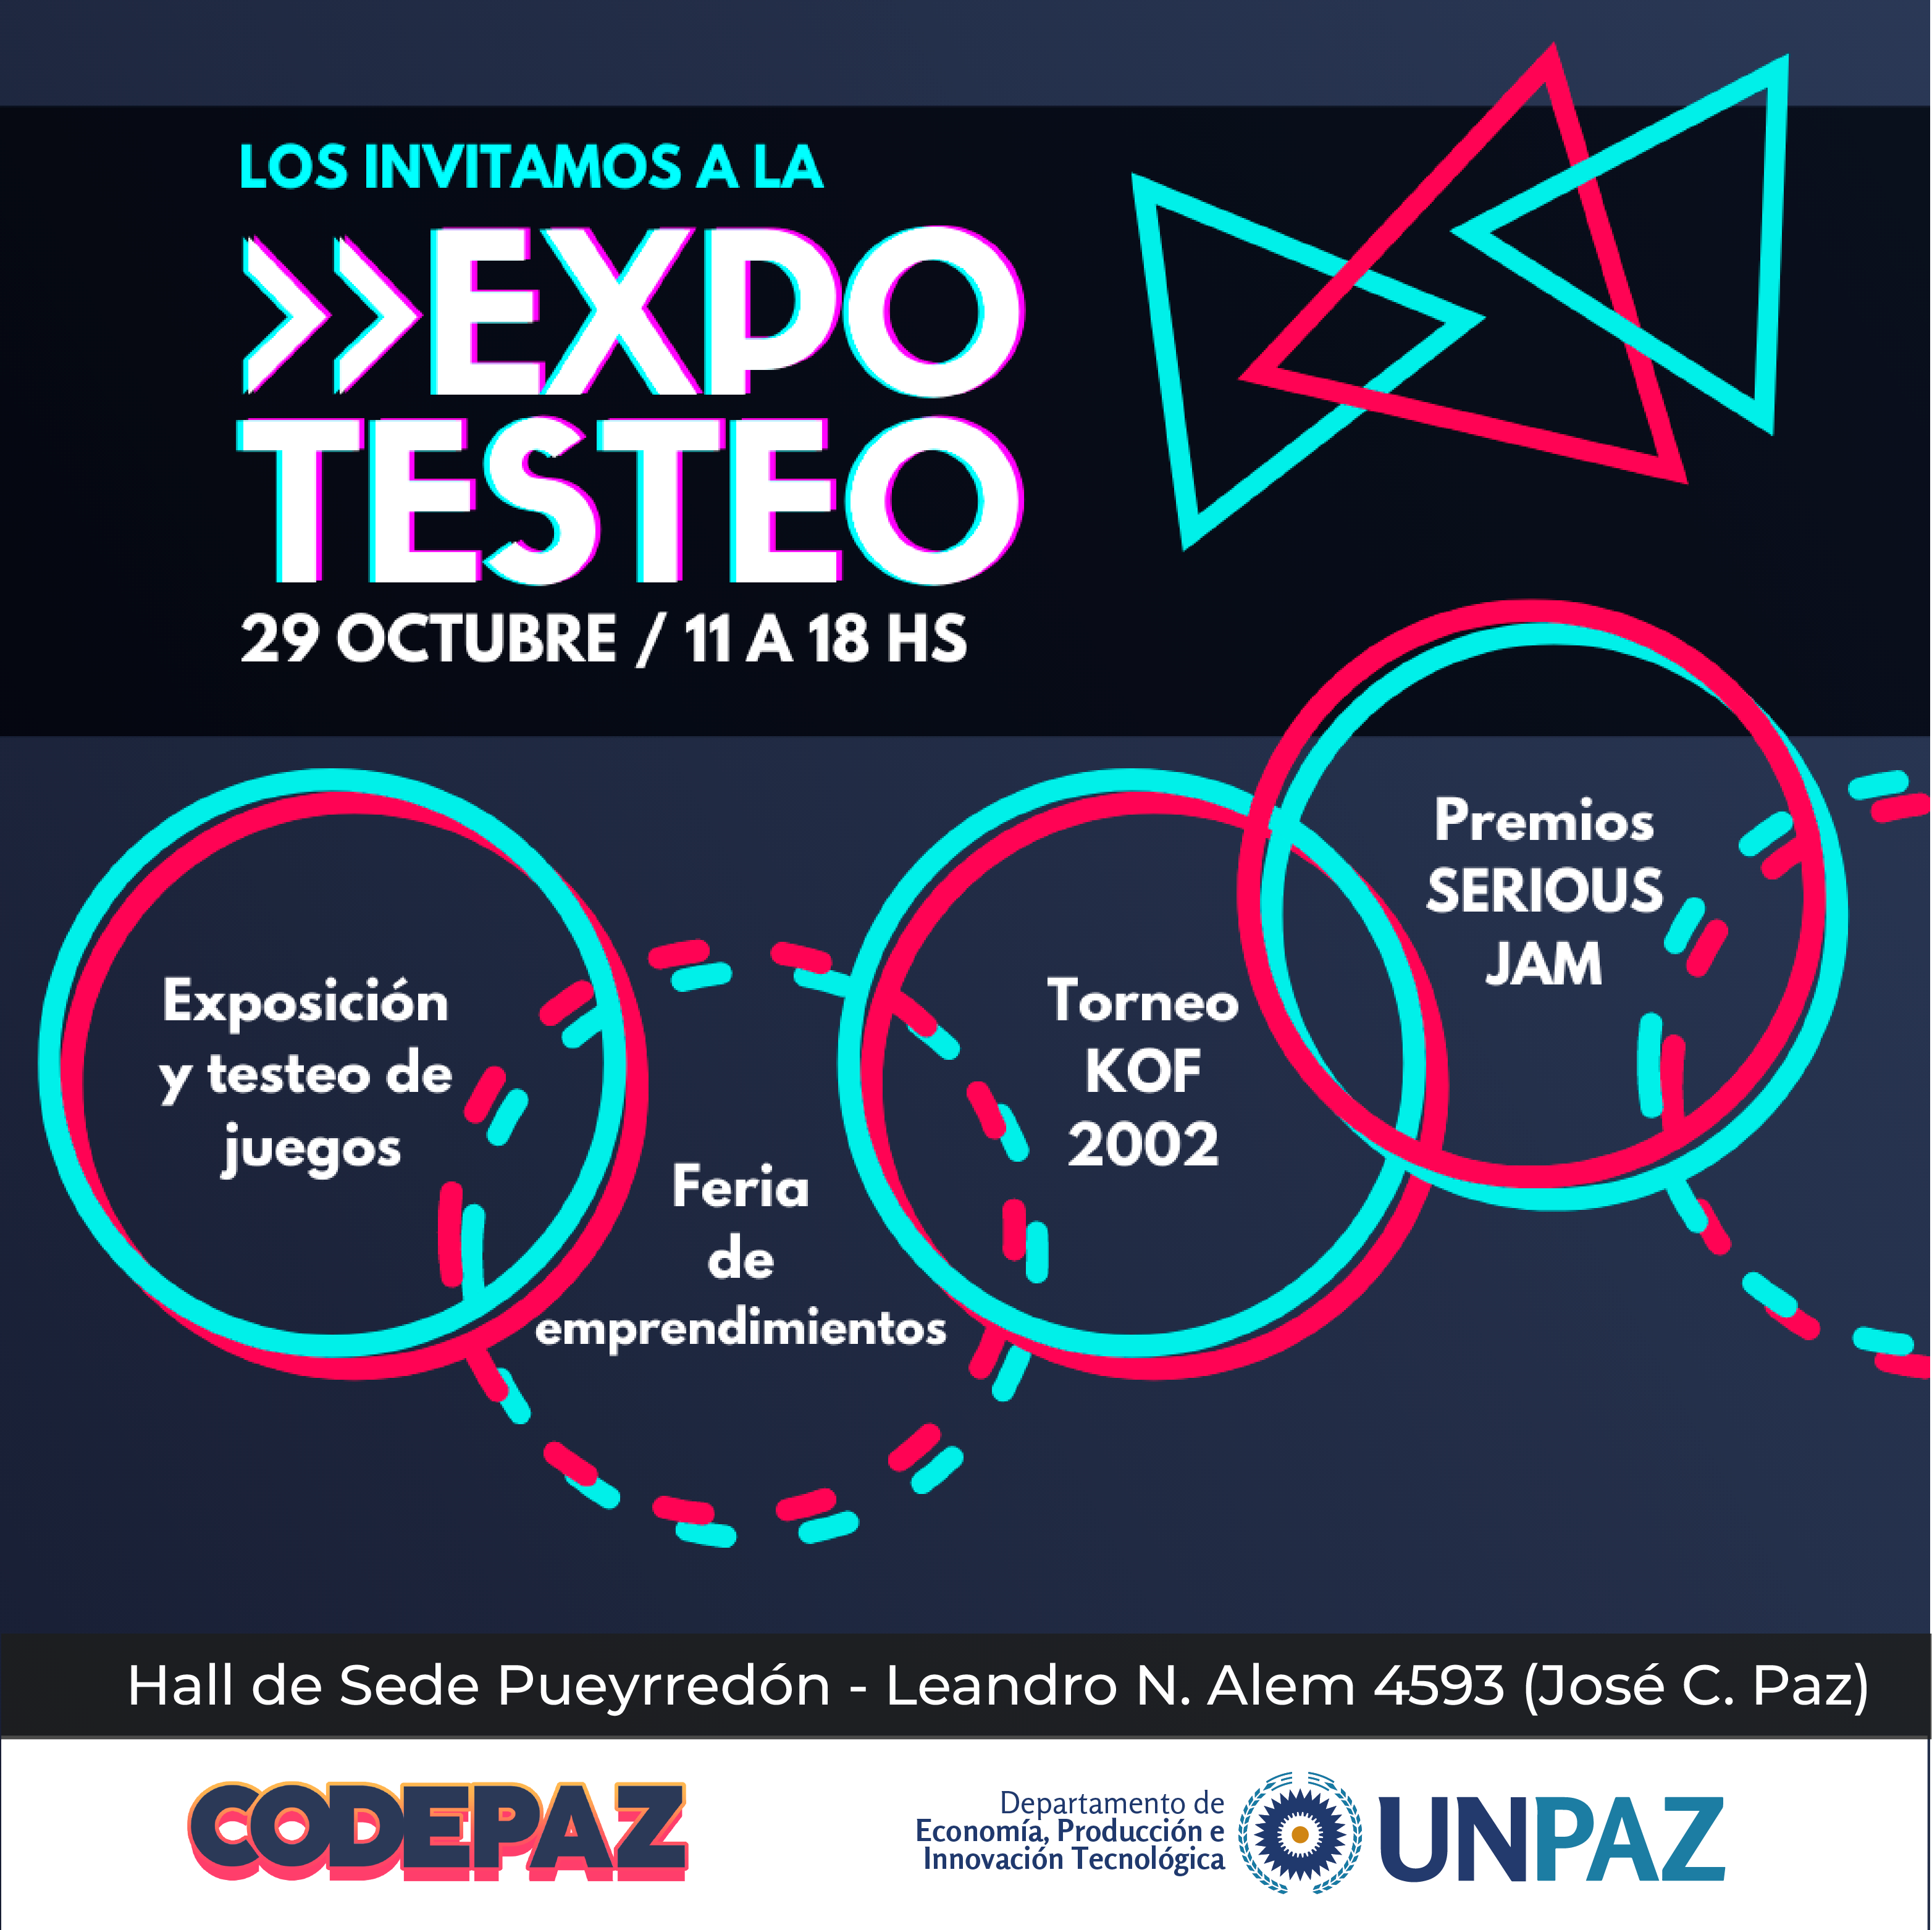 EXPO TESTEO - UNPAZ